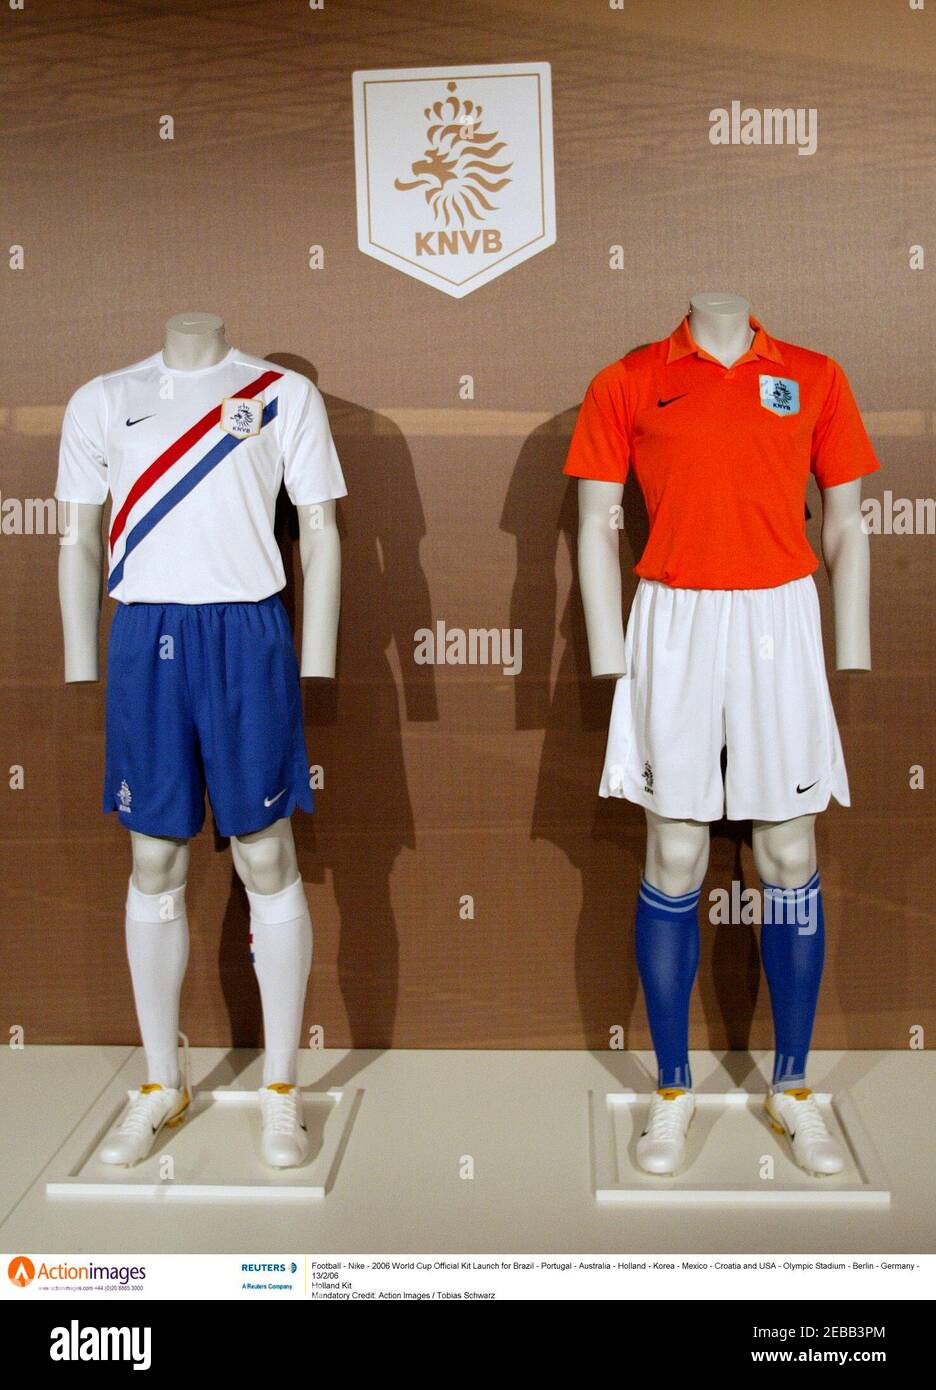 Football - Nike - 2006 World Cup Official Kit Launch for Brazil - Portugal  - Australia - Holland - Korea - Mexico - Croatia